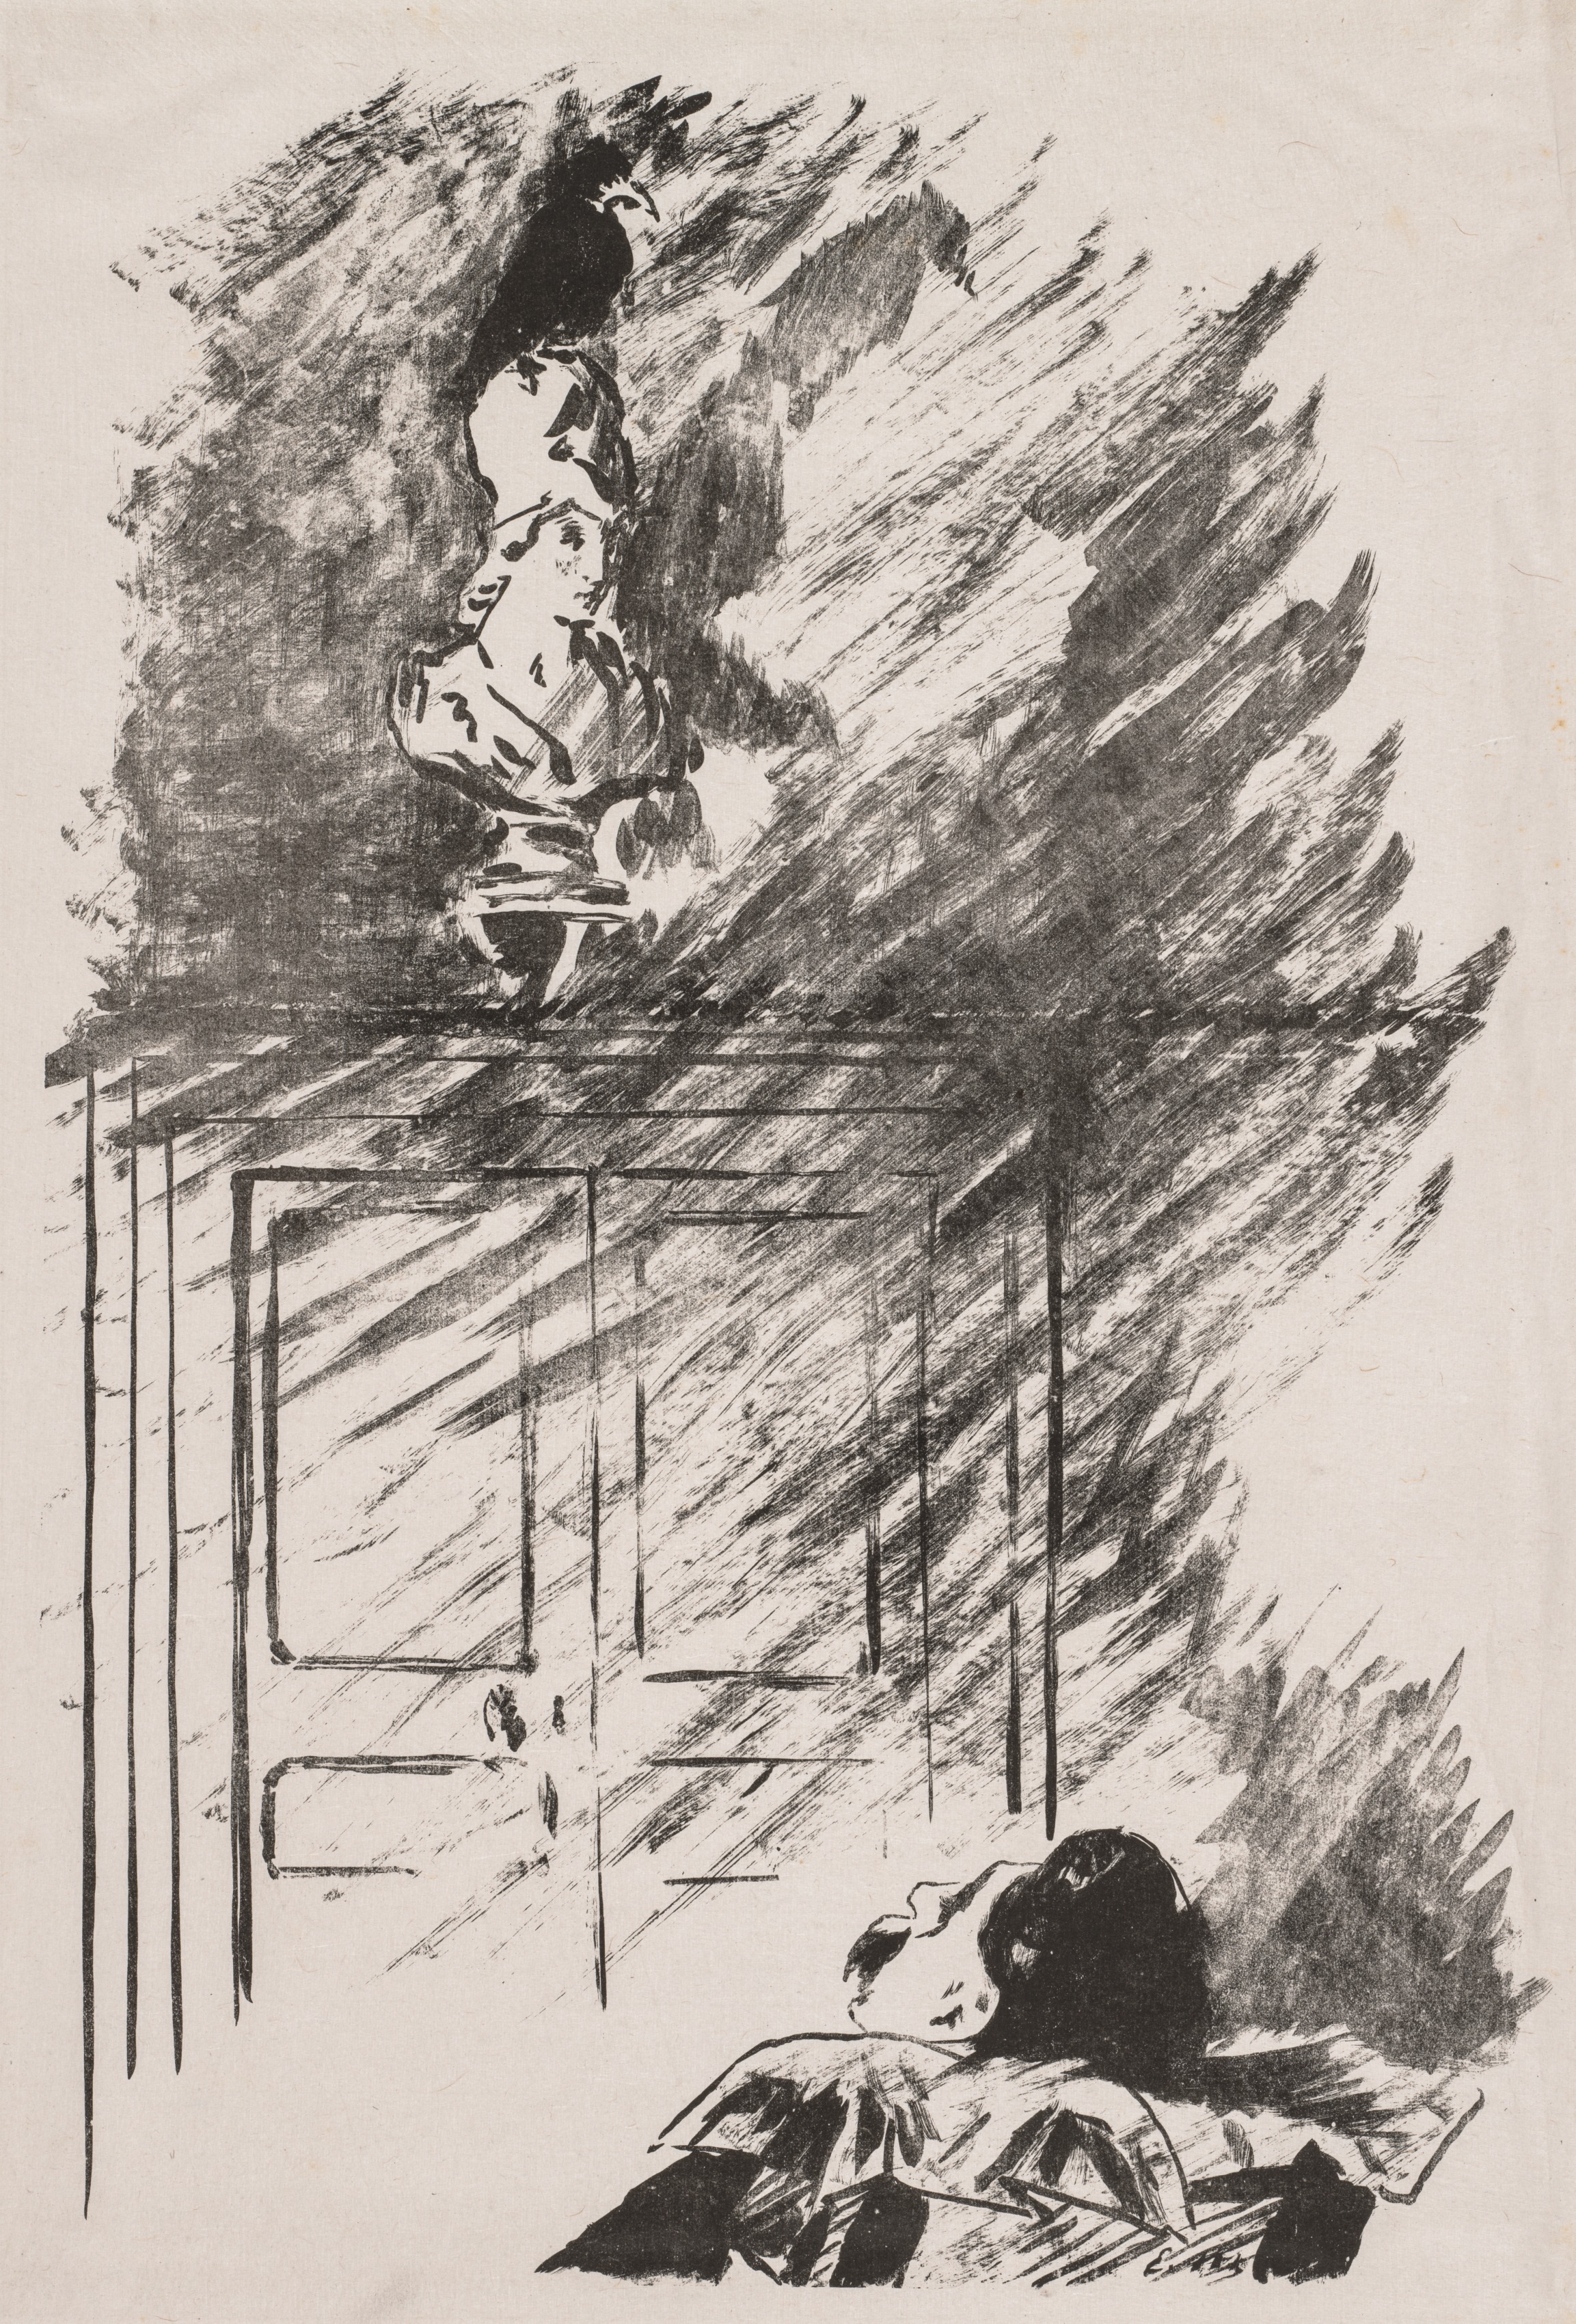 Illustration for The Raven by Edgar Allan Poe